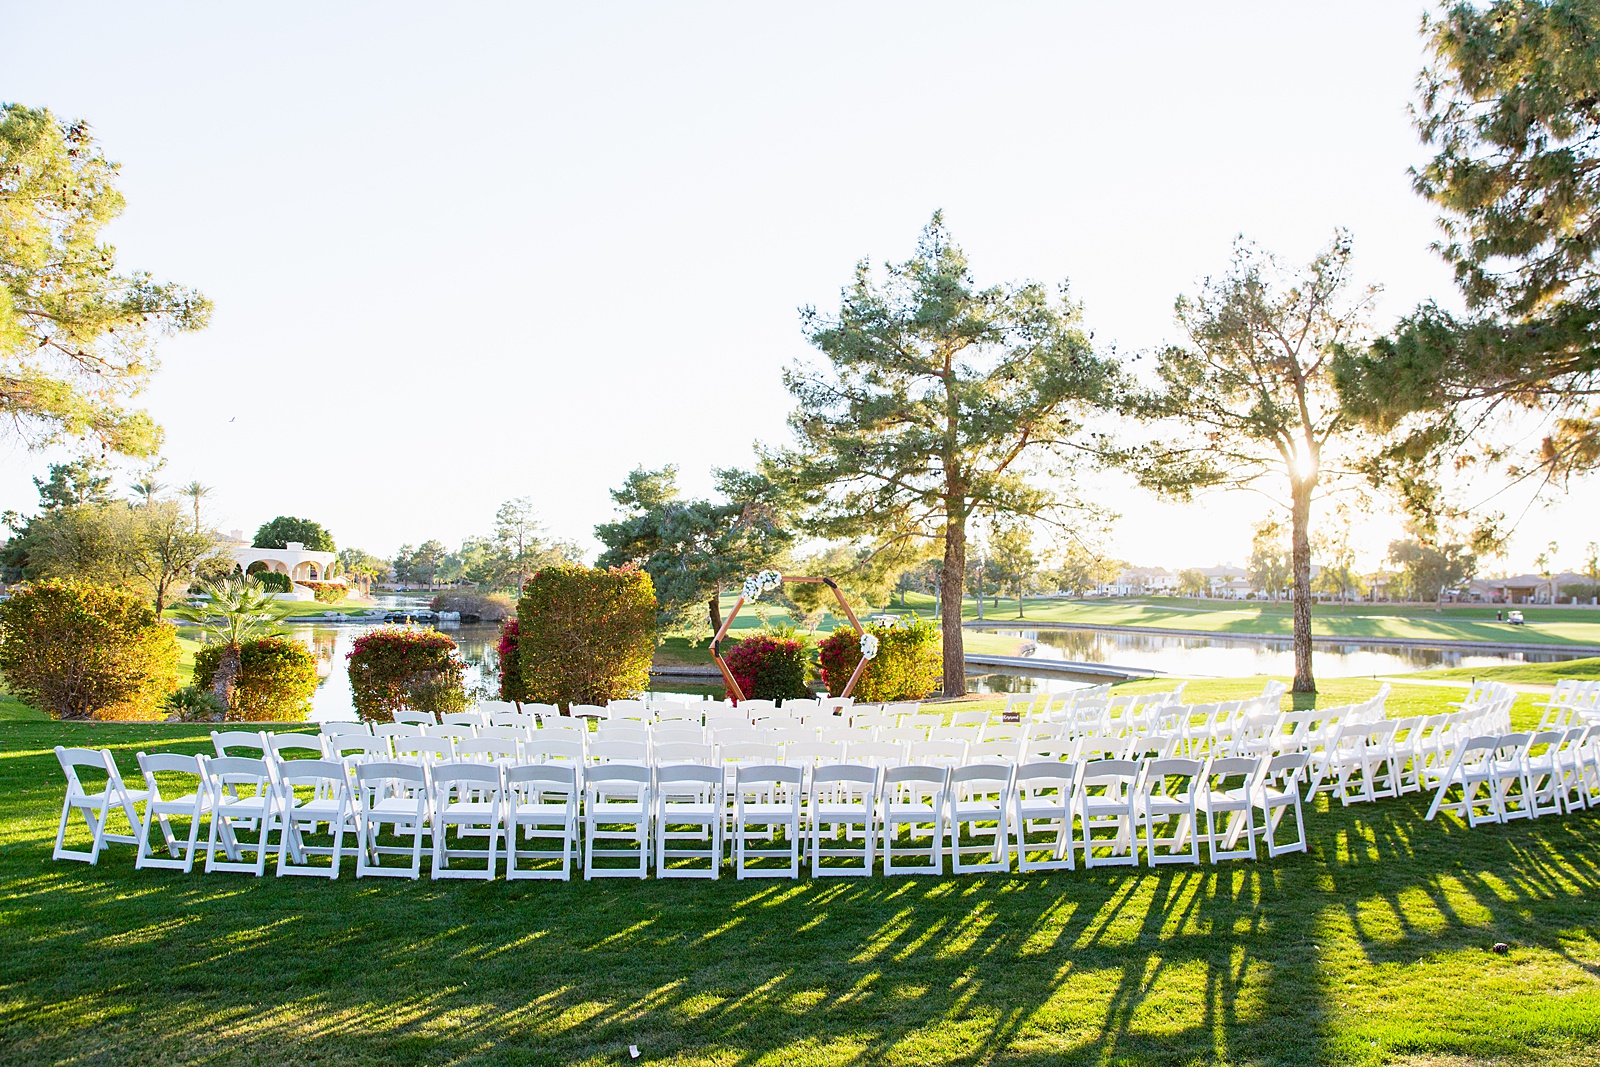 Wedding ceremony at Ocotillo Oasis by Phoenix wedding photographer PMA Photography.